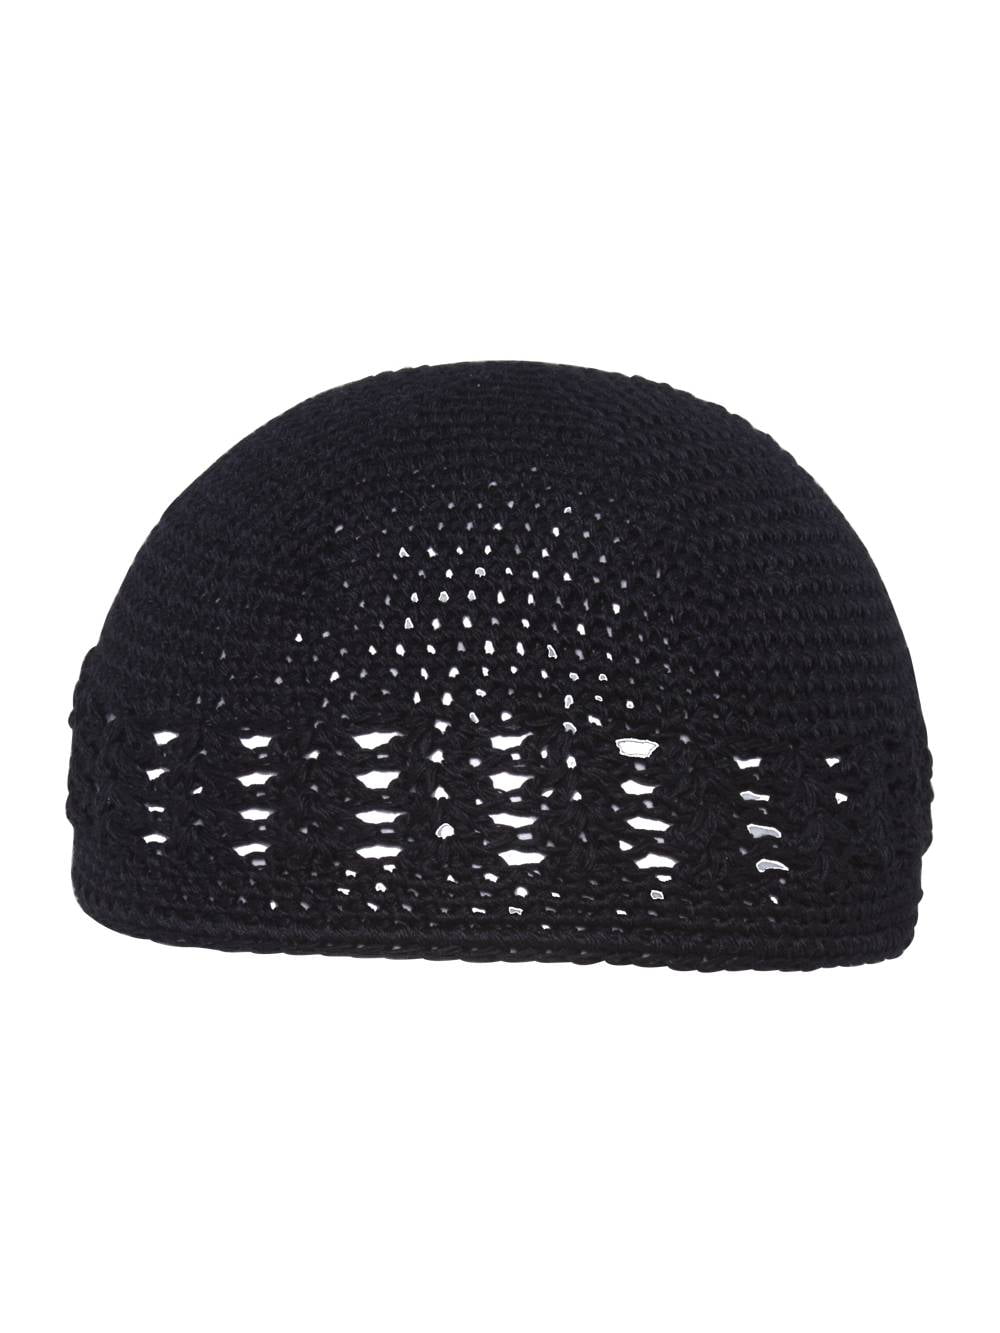 Simoner Broken Skull Warm Stretchy Solid Daily Skull Cap,Knit Wool Beanie Hat Black